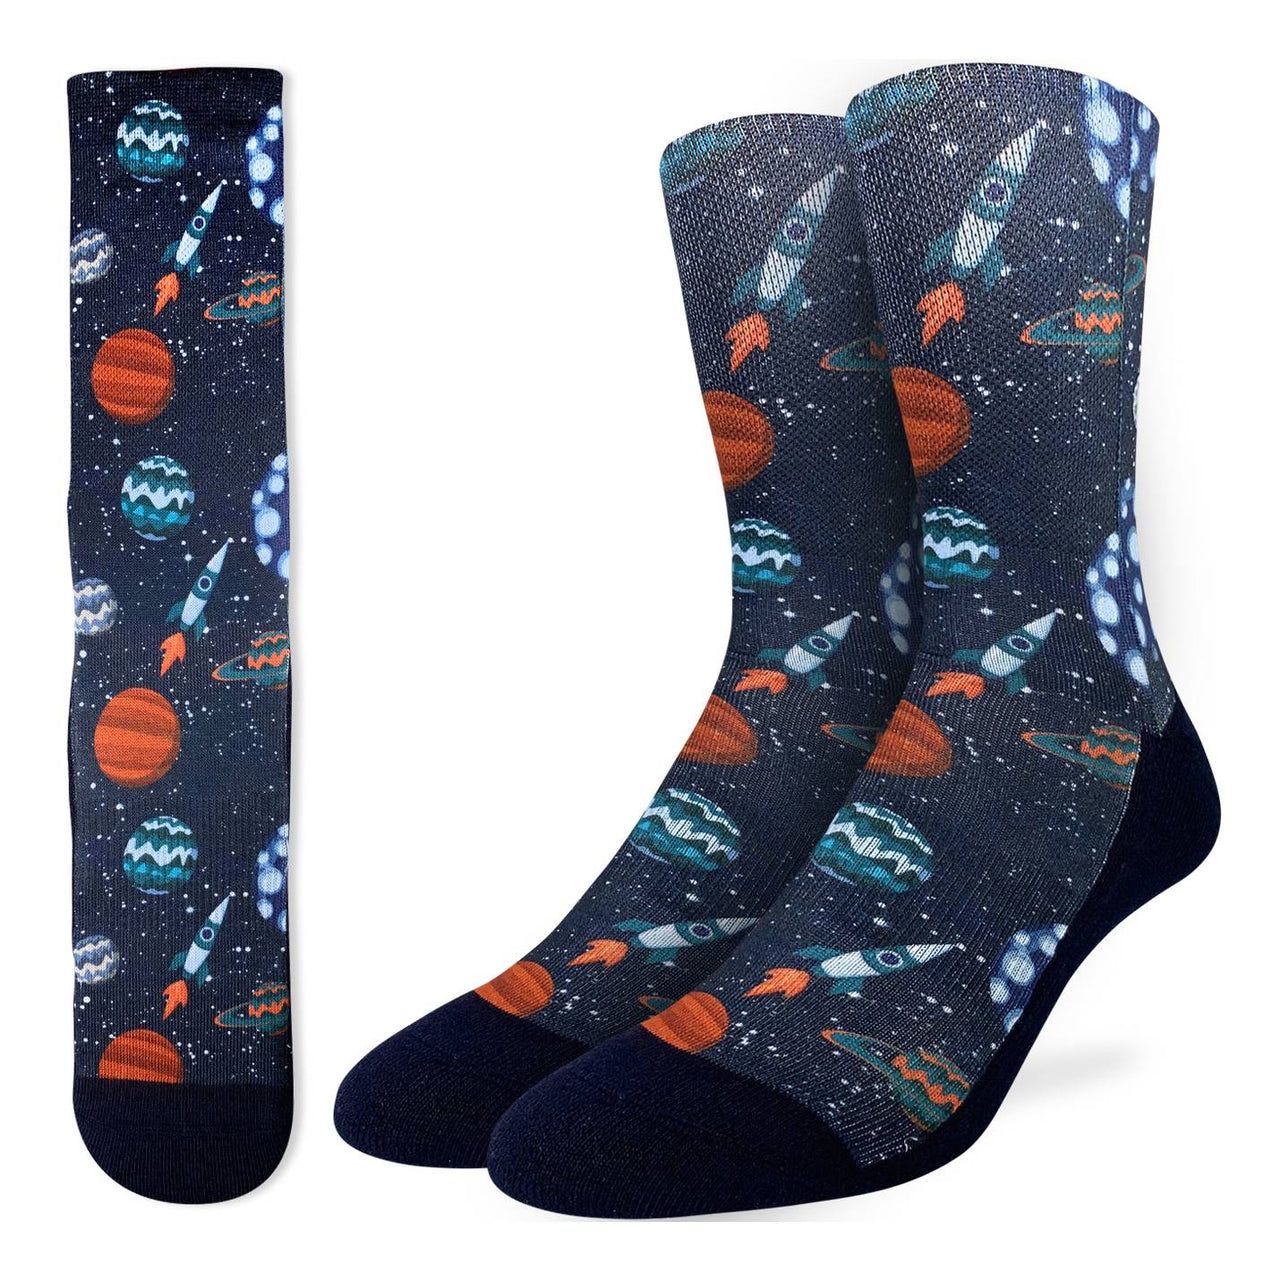 Men's Socks - Planets & Rockets